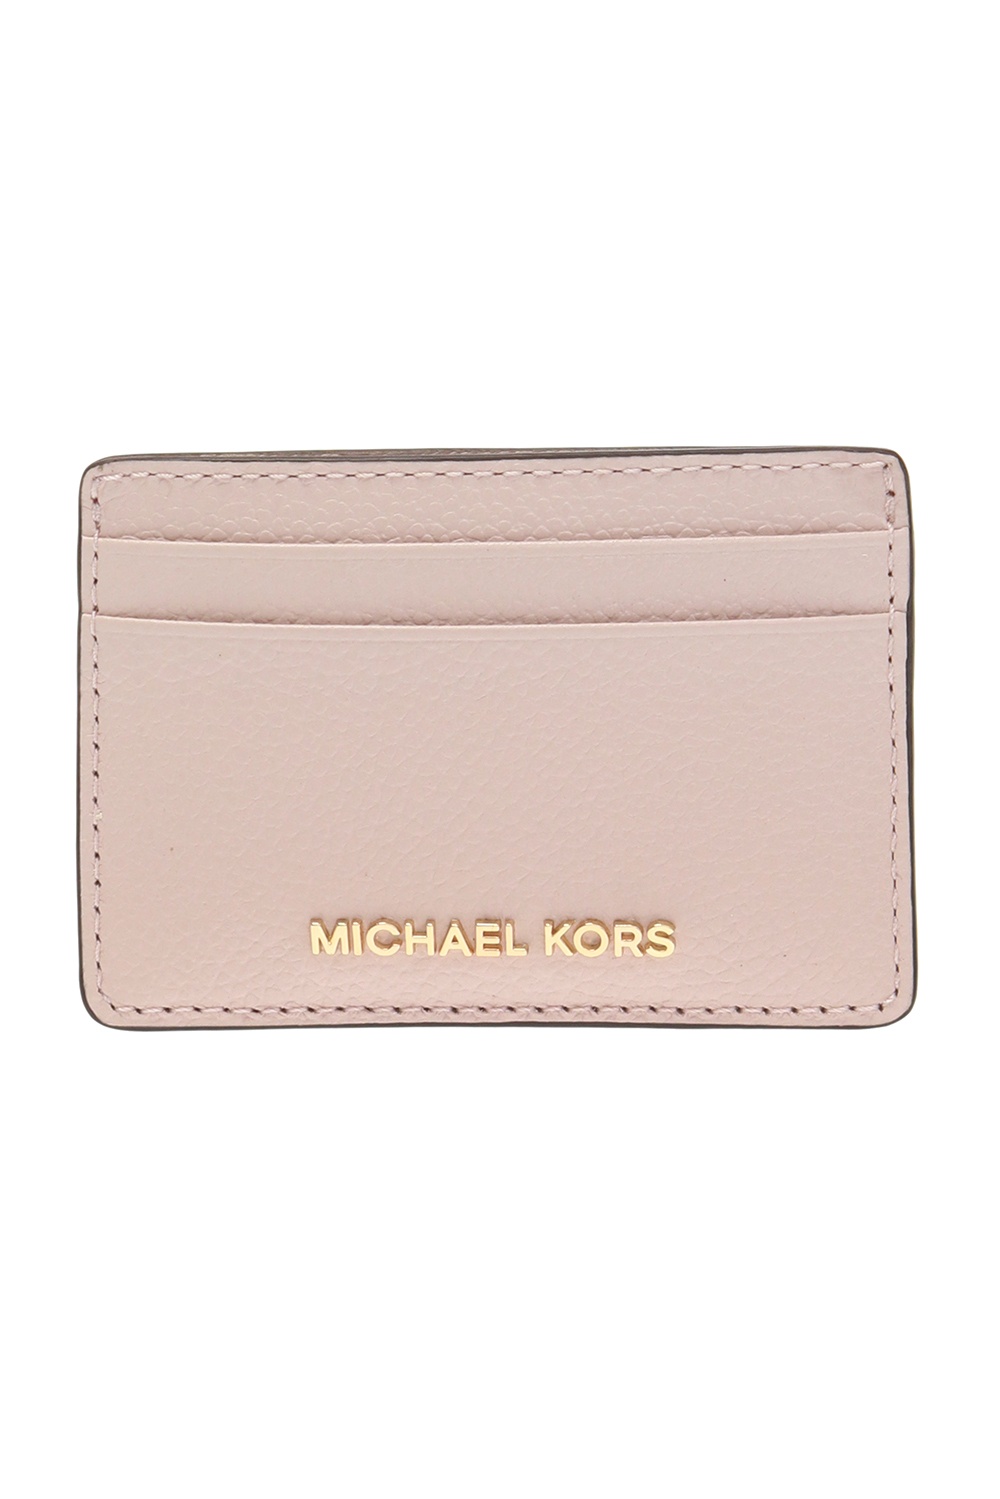 michael kors card purse